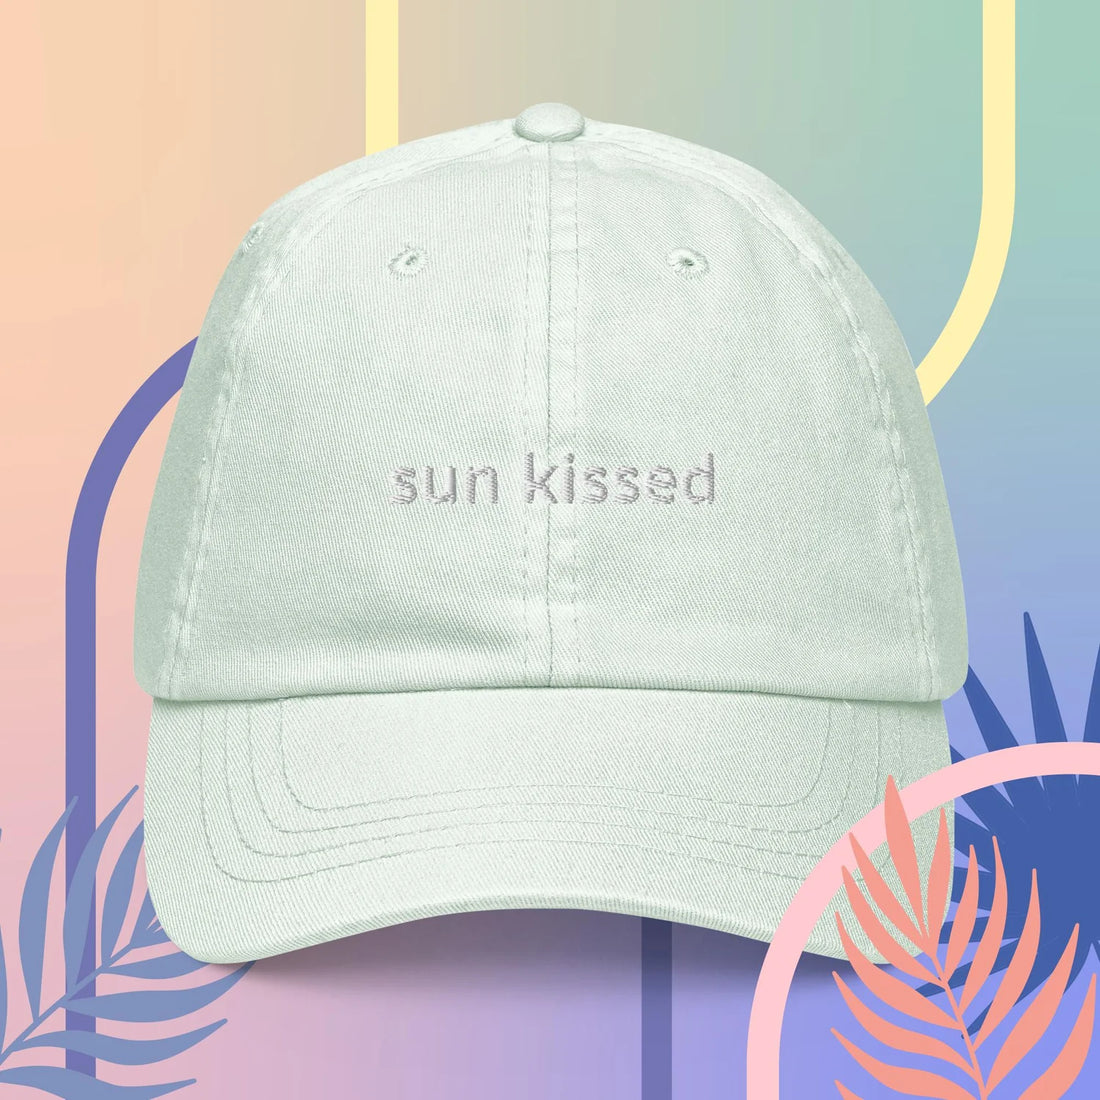 Bundle: 2x Baseball Cap - Sun kissed